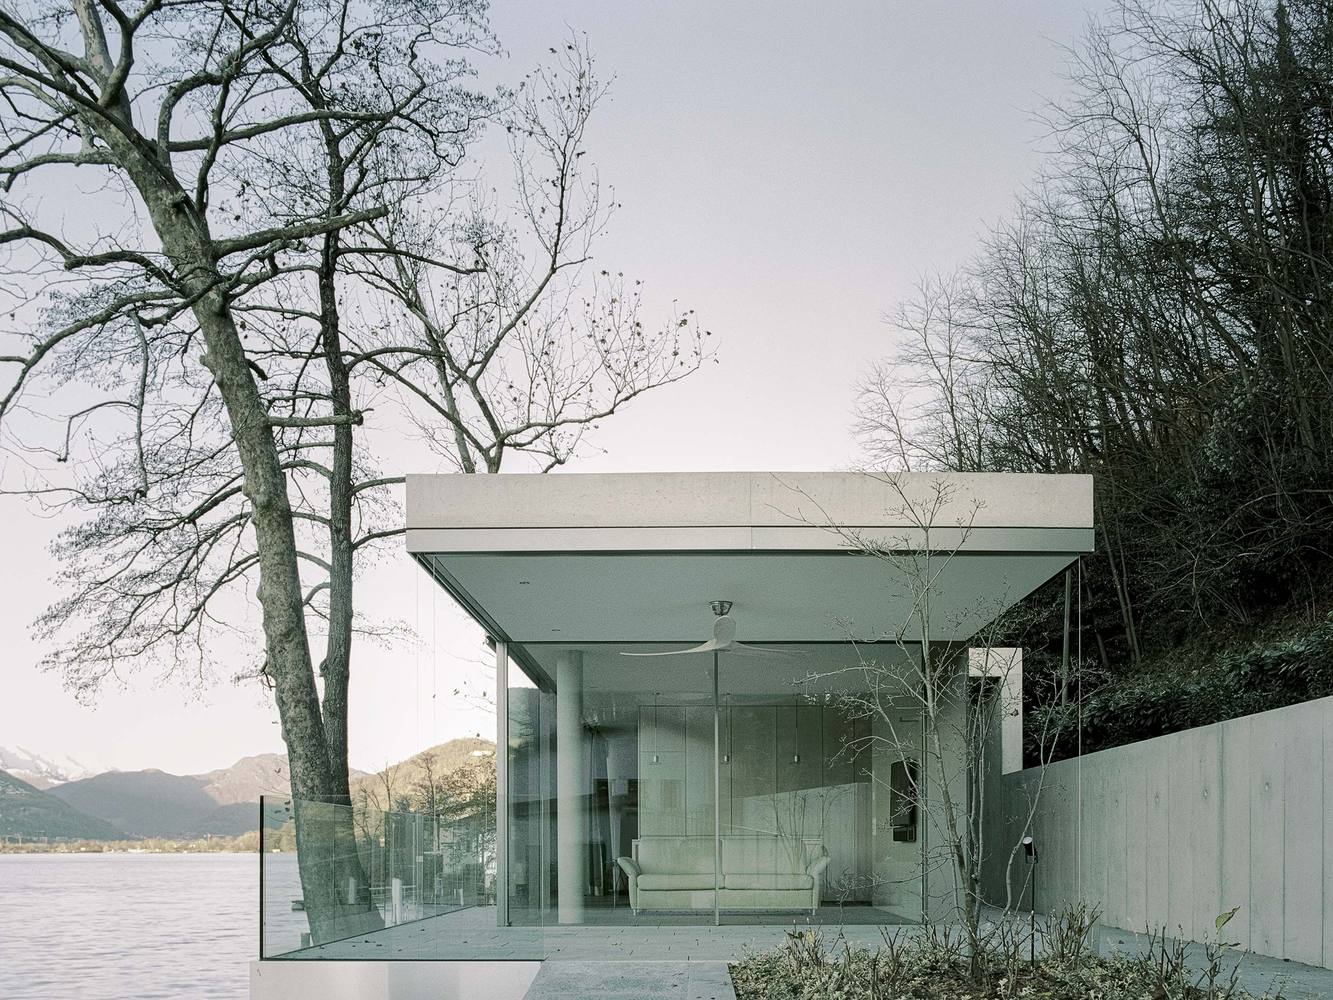 Raffaele Cammarata,瑞士,住宅設計,國外住宅設計案例,極簡風格,度假屋設計,獨棟住宅,50㎡,湖景度假屋